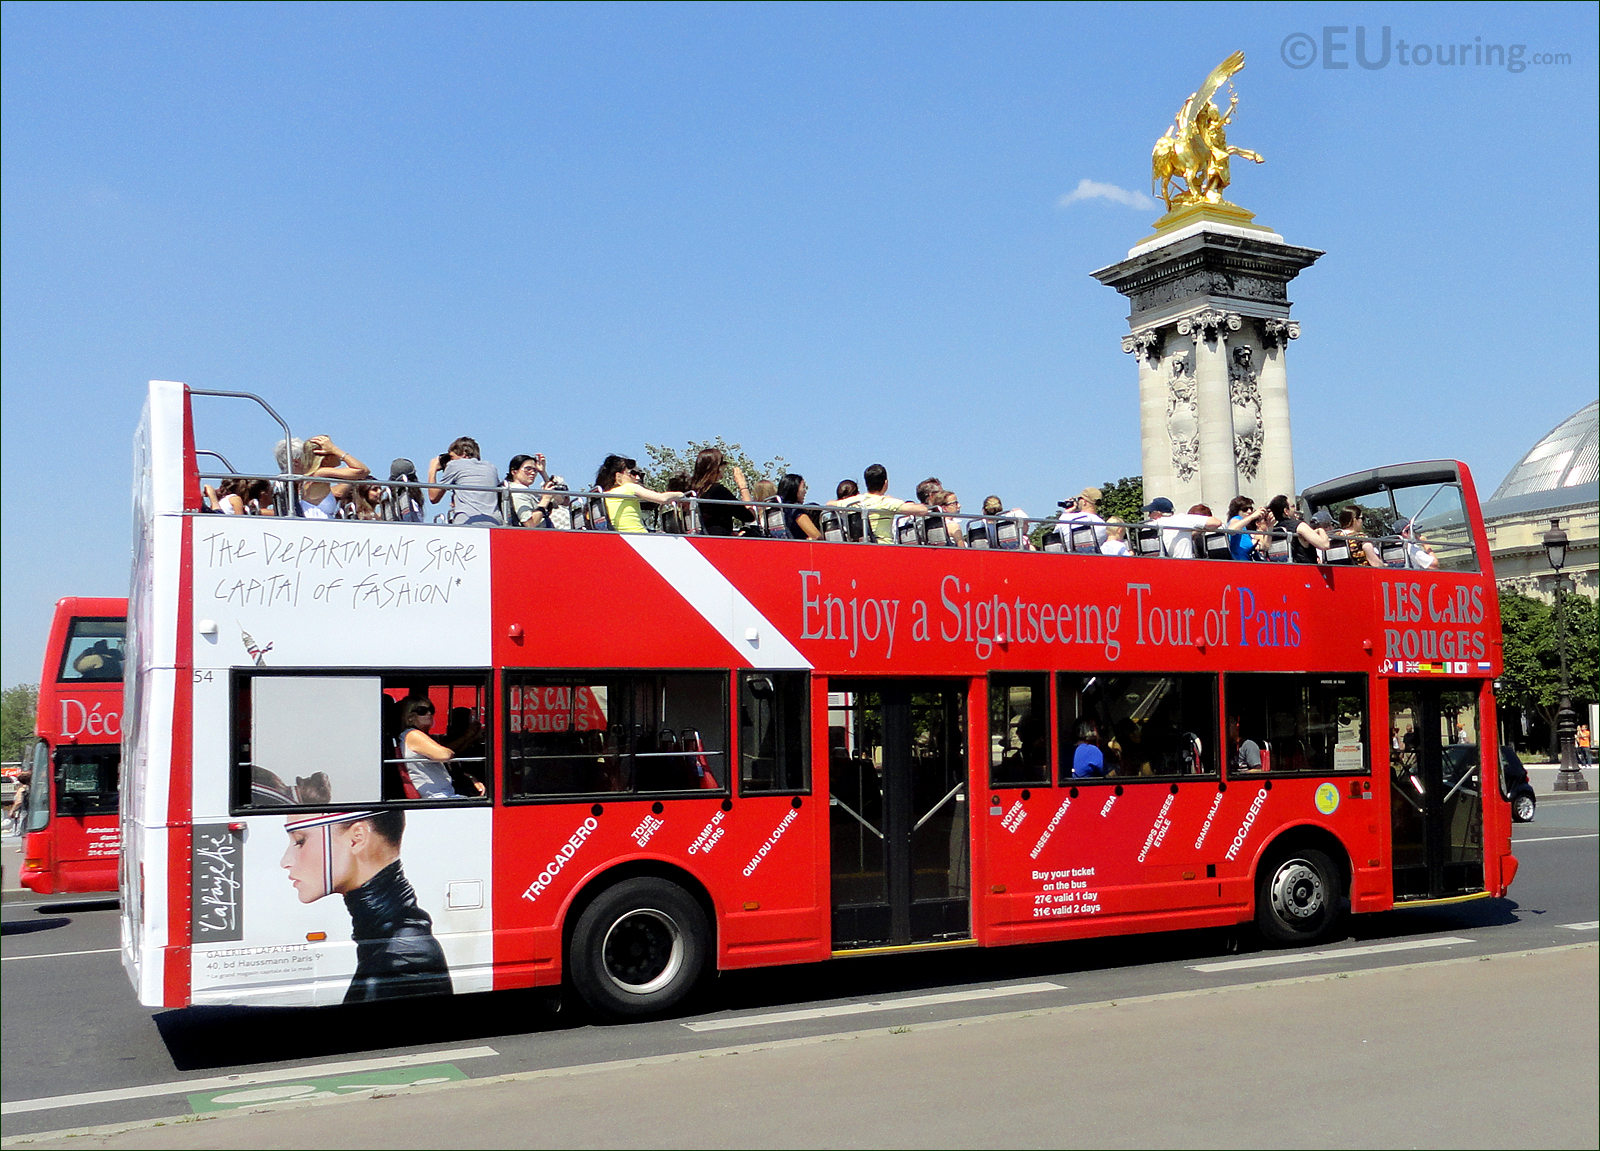 paris city tour bus from airport